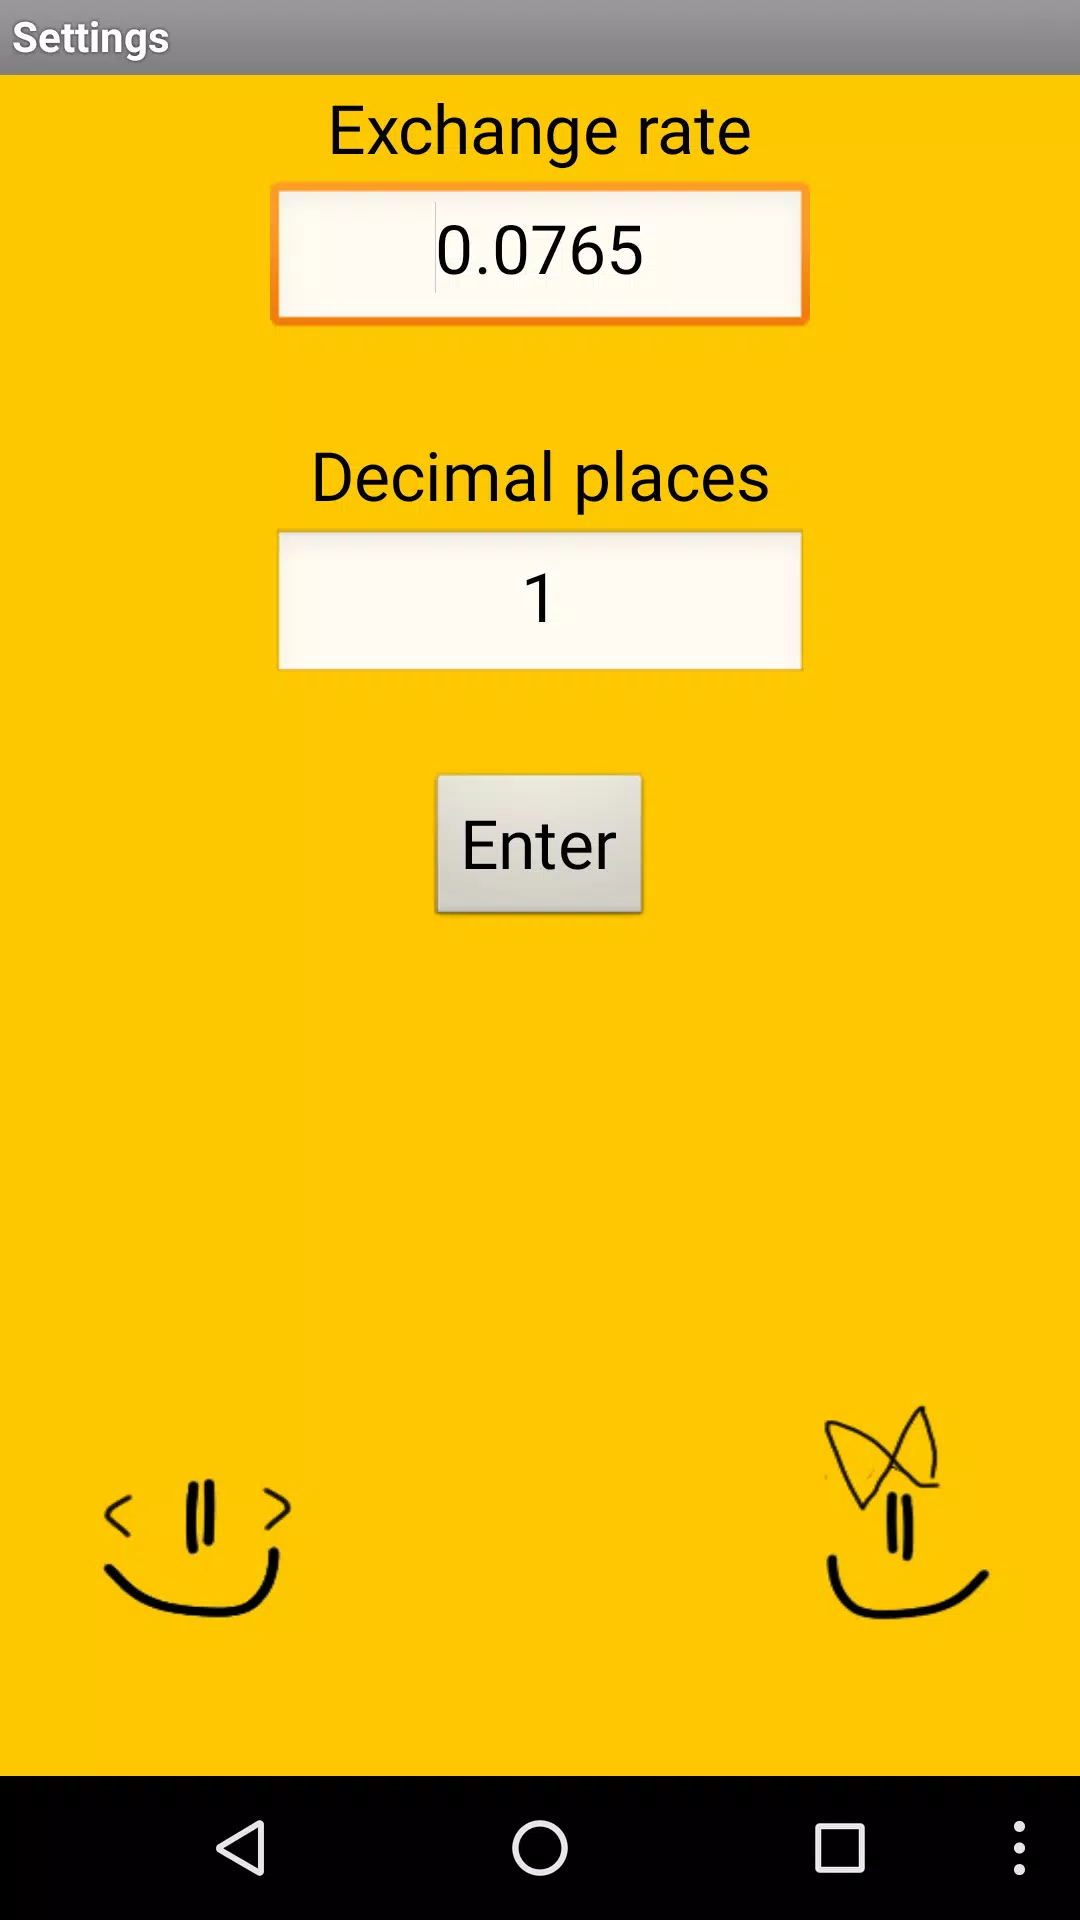 Calculadora de divisas for Android - APK Download